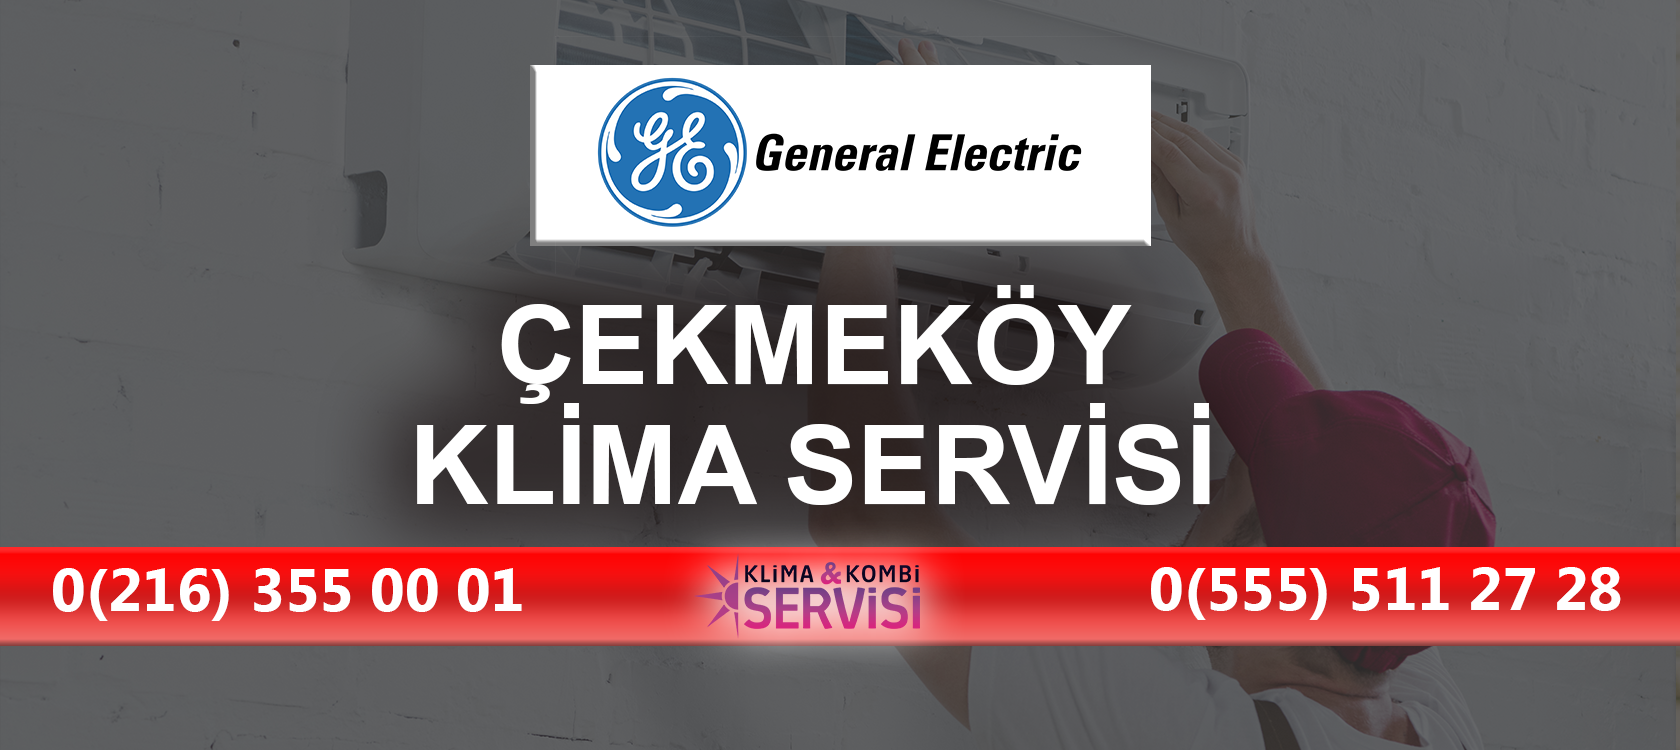 Cekmekoy General Electric Klima Servisi